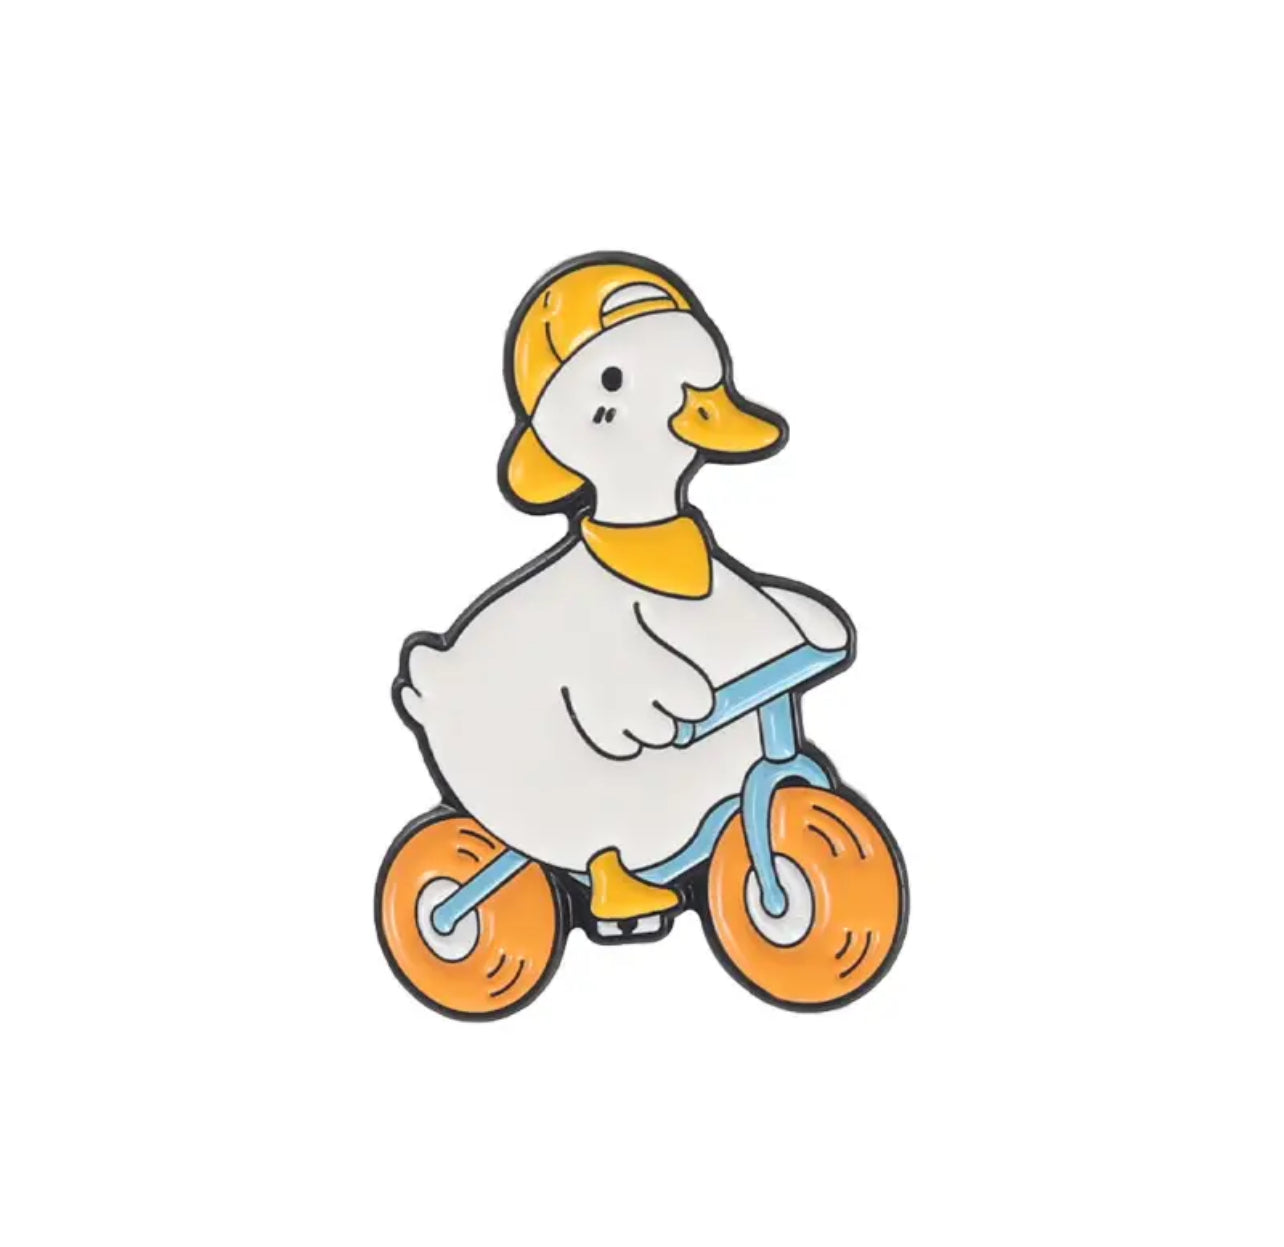 One duck, by bike